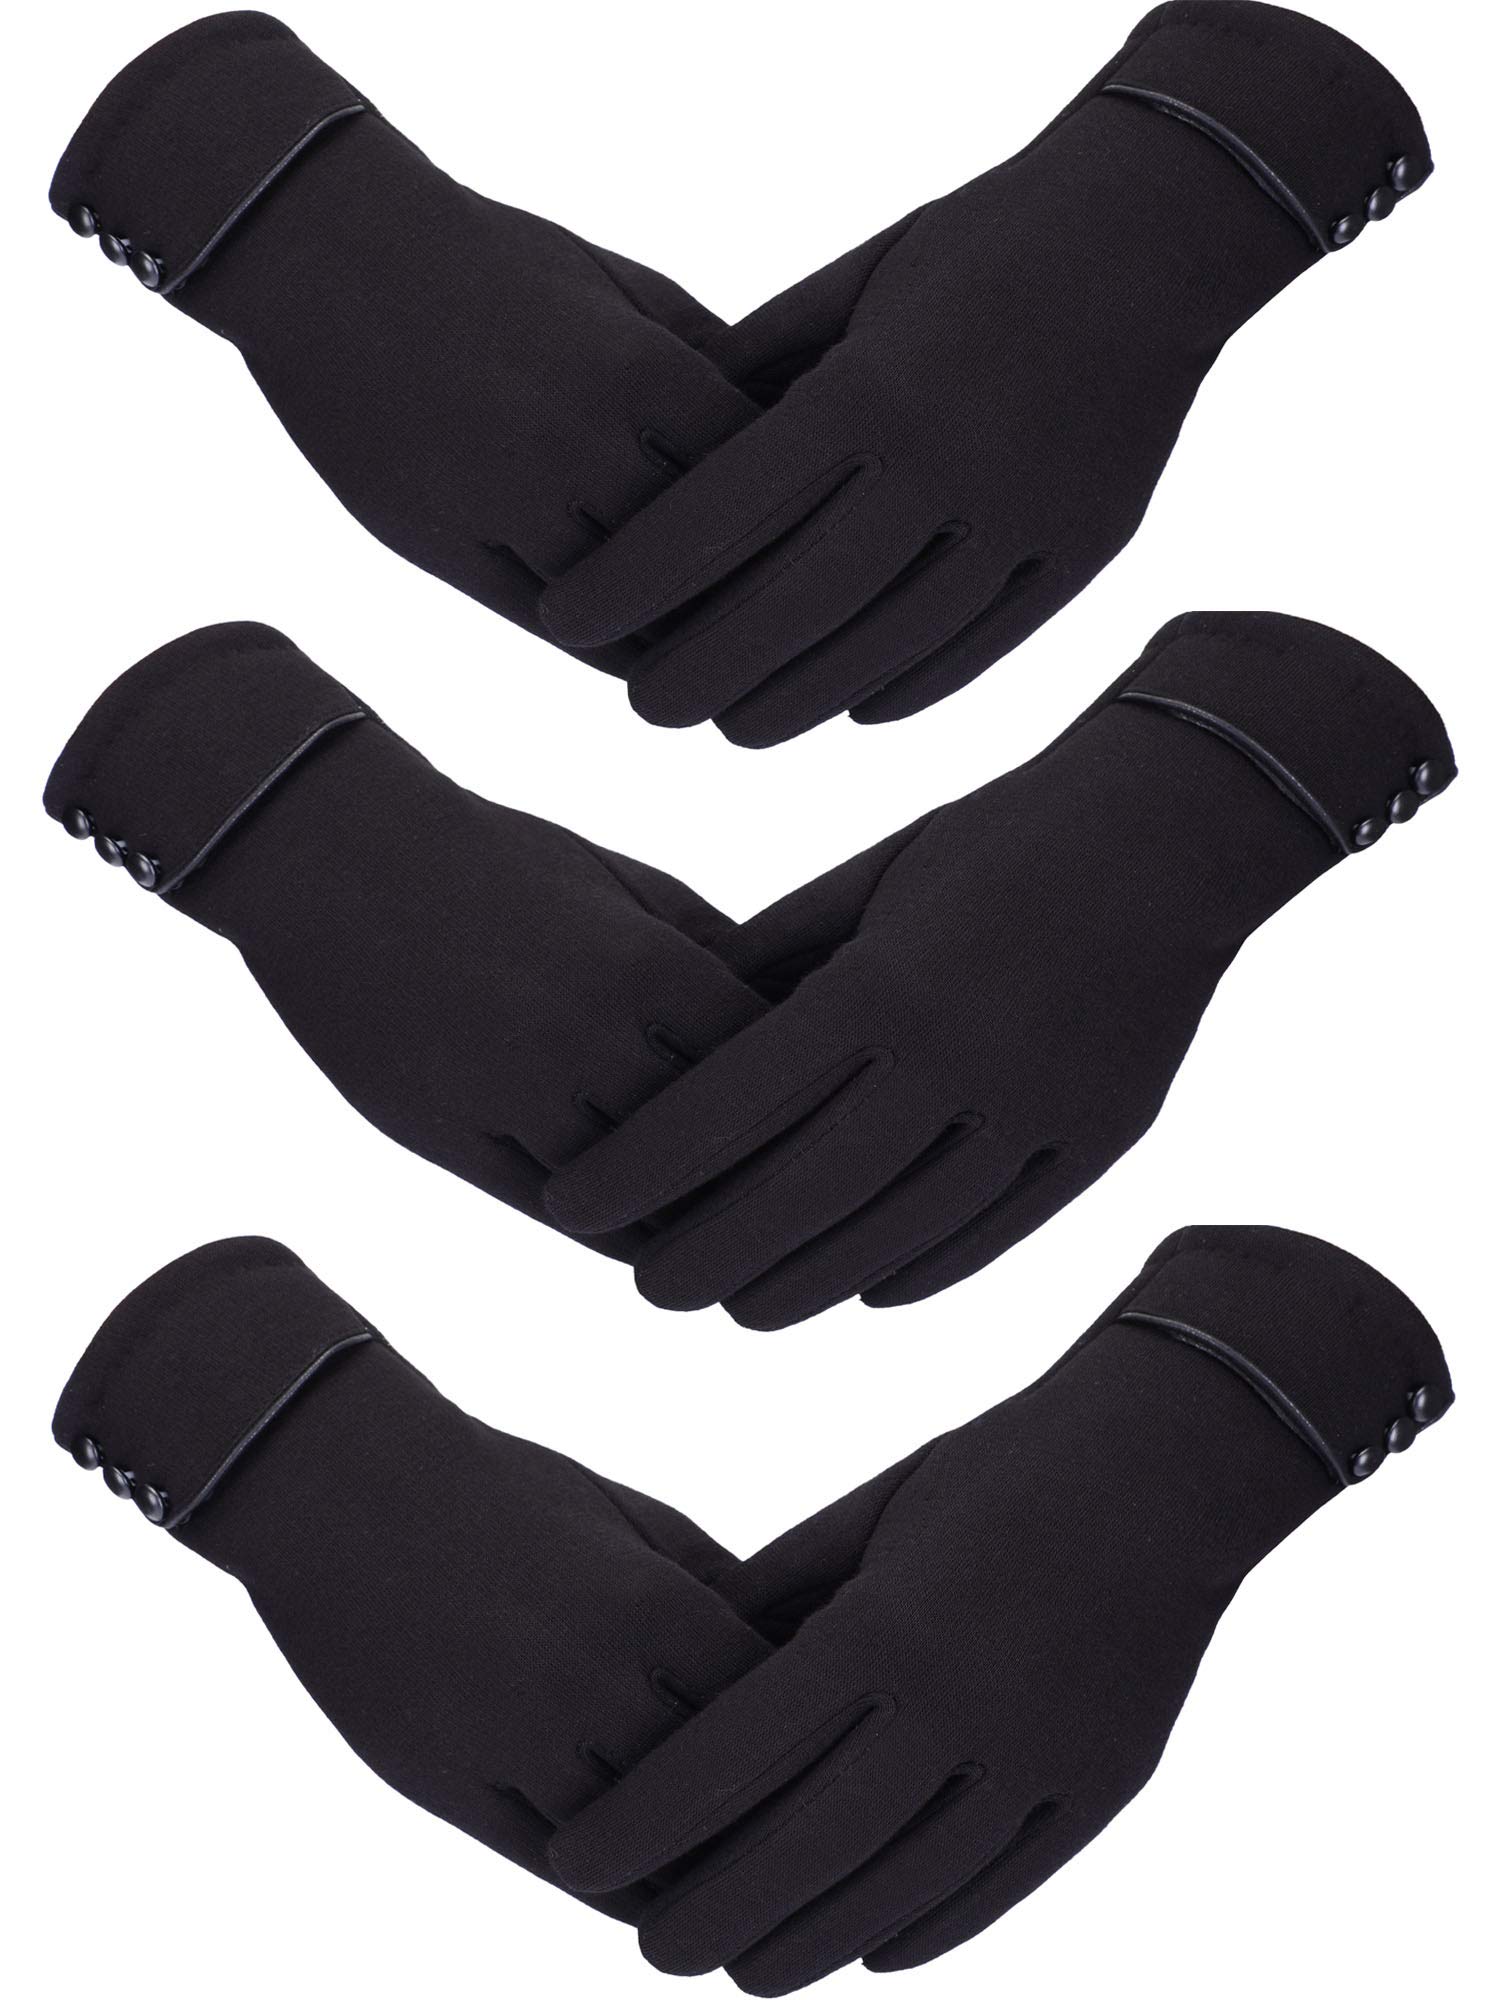 3 Pairs Women Winter Gloves Warm Touchscreen Gloves Windproof Gloves for Women Girls Winter Using